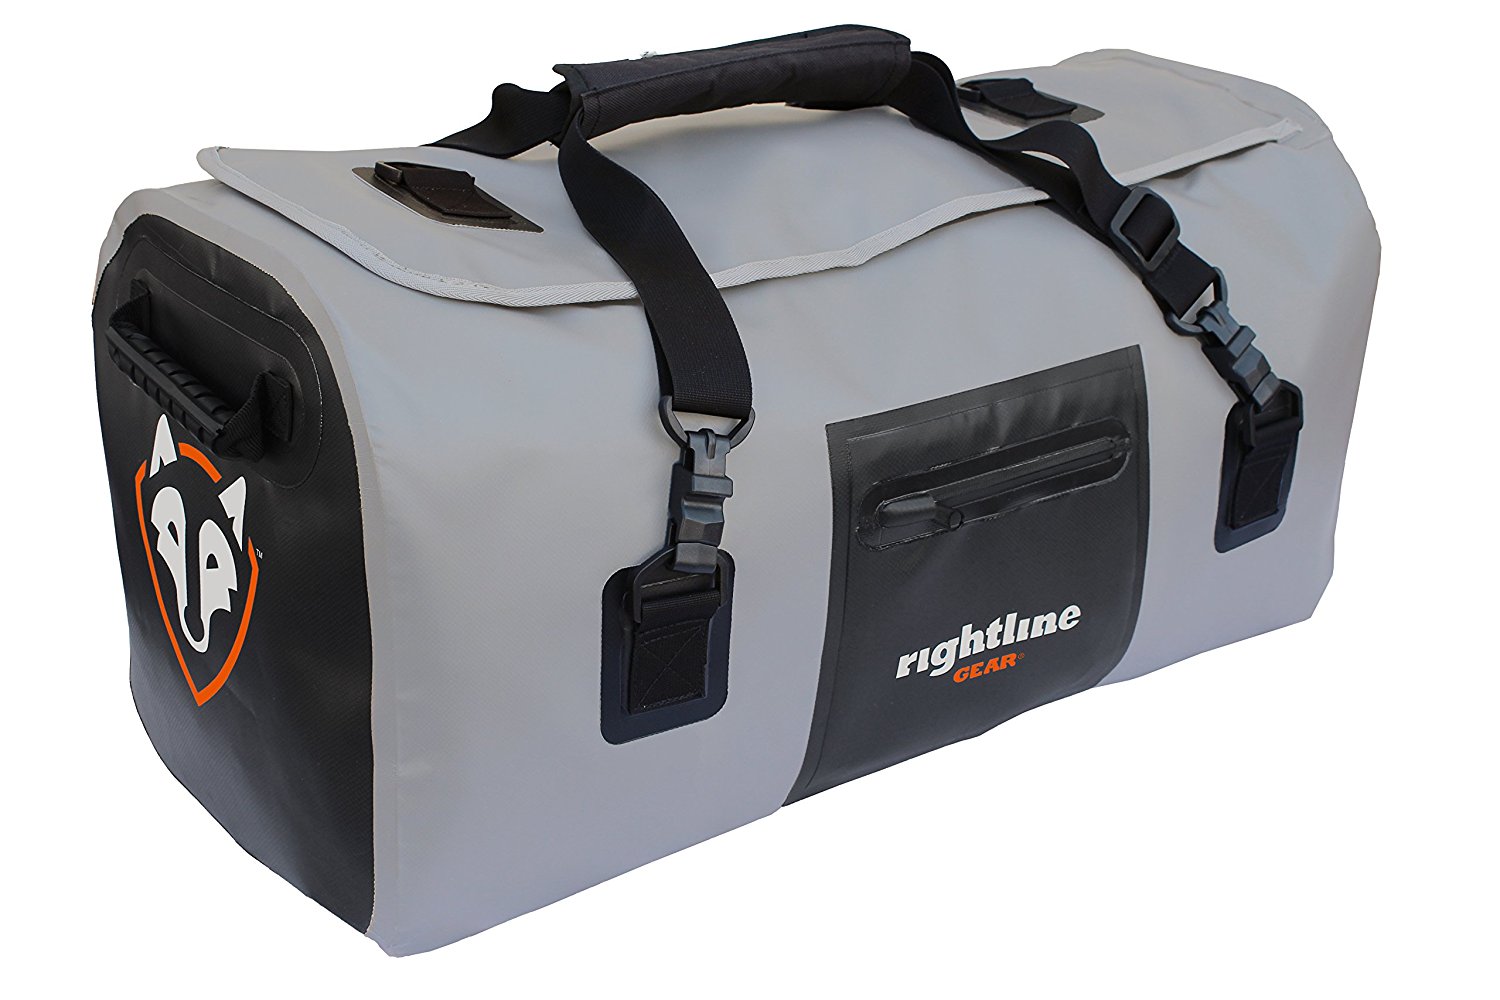  Rightline Gear Auto Duffle Bag